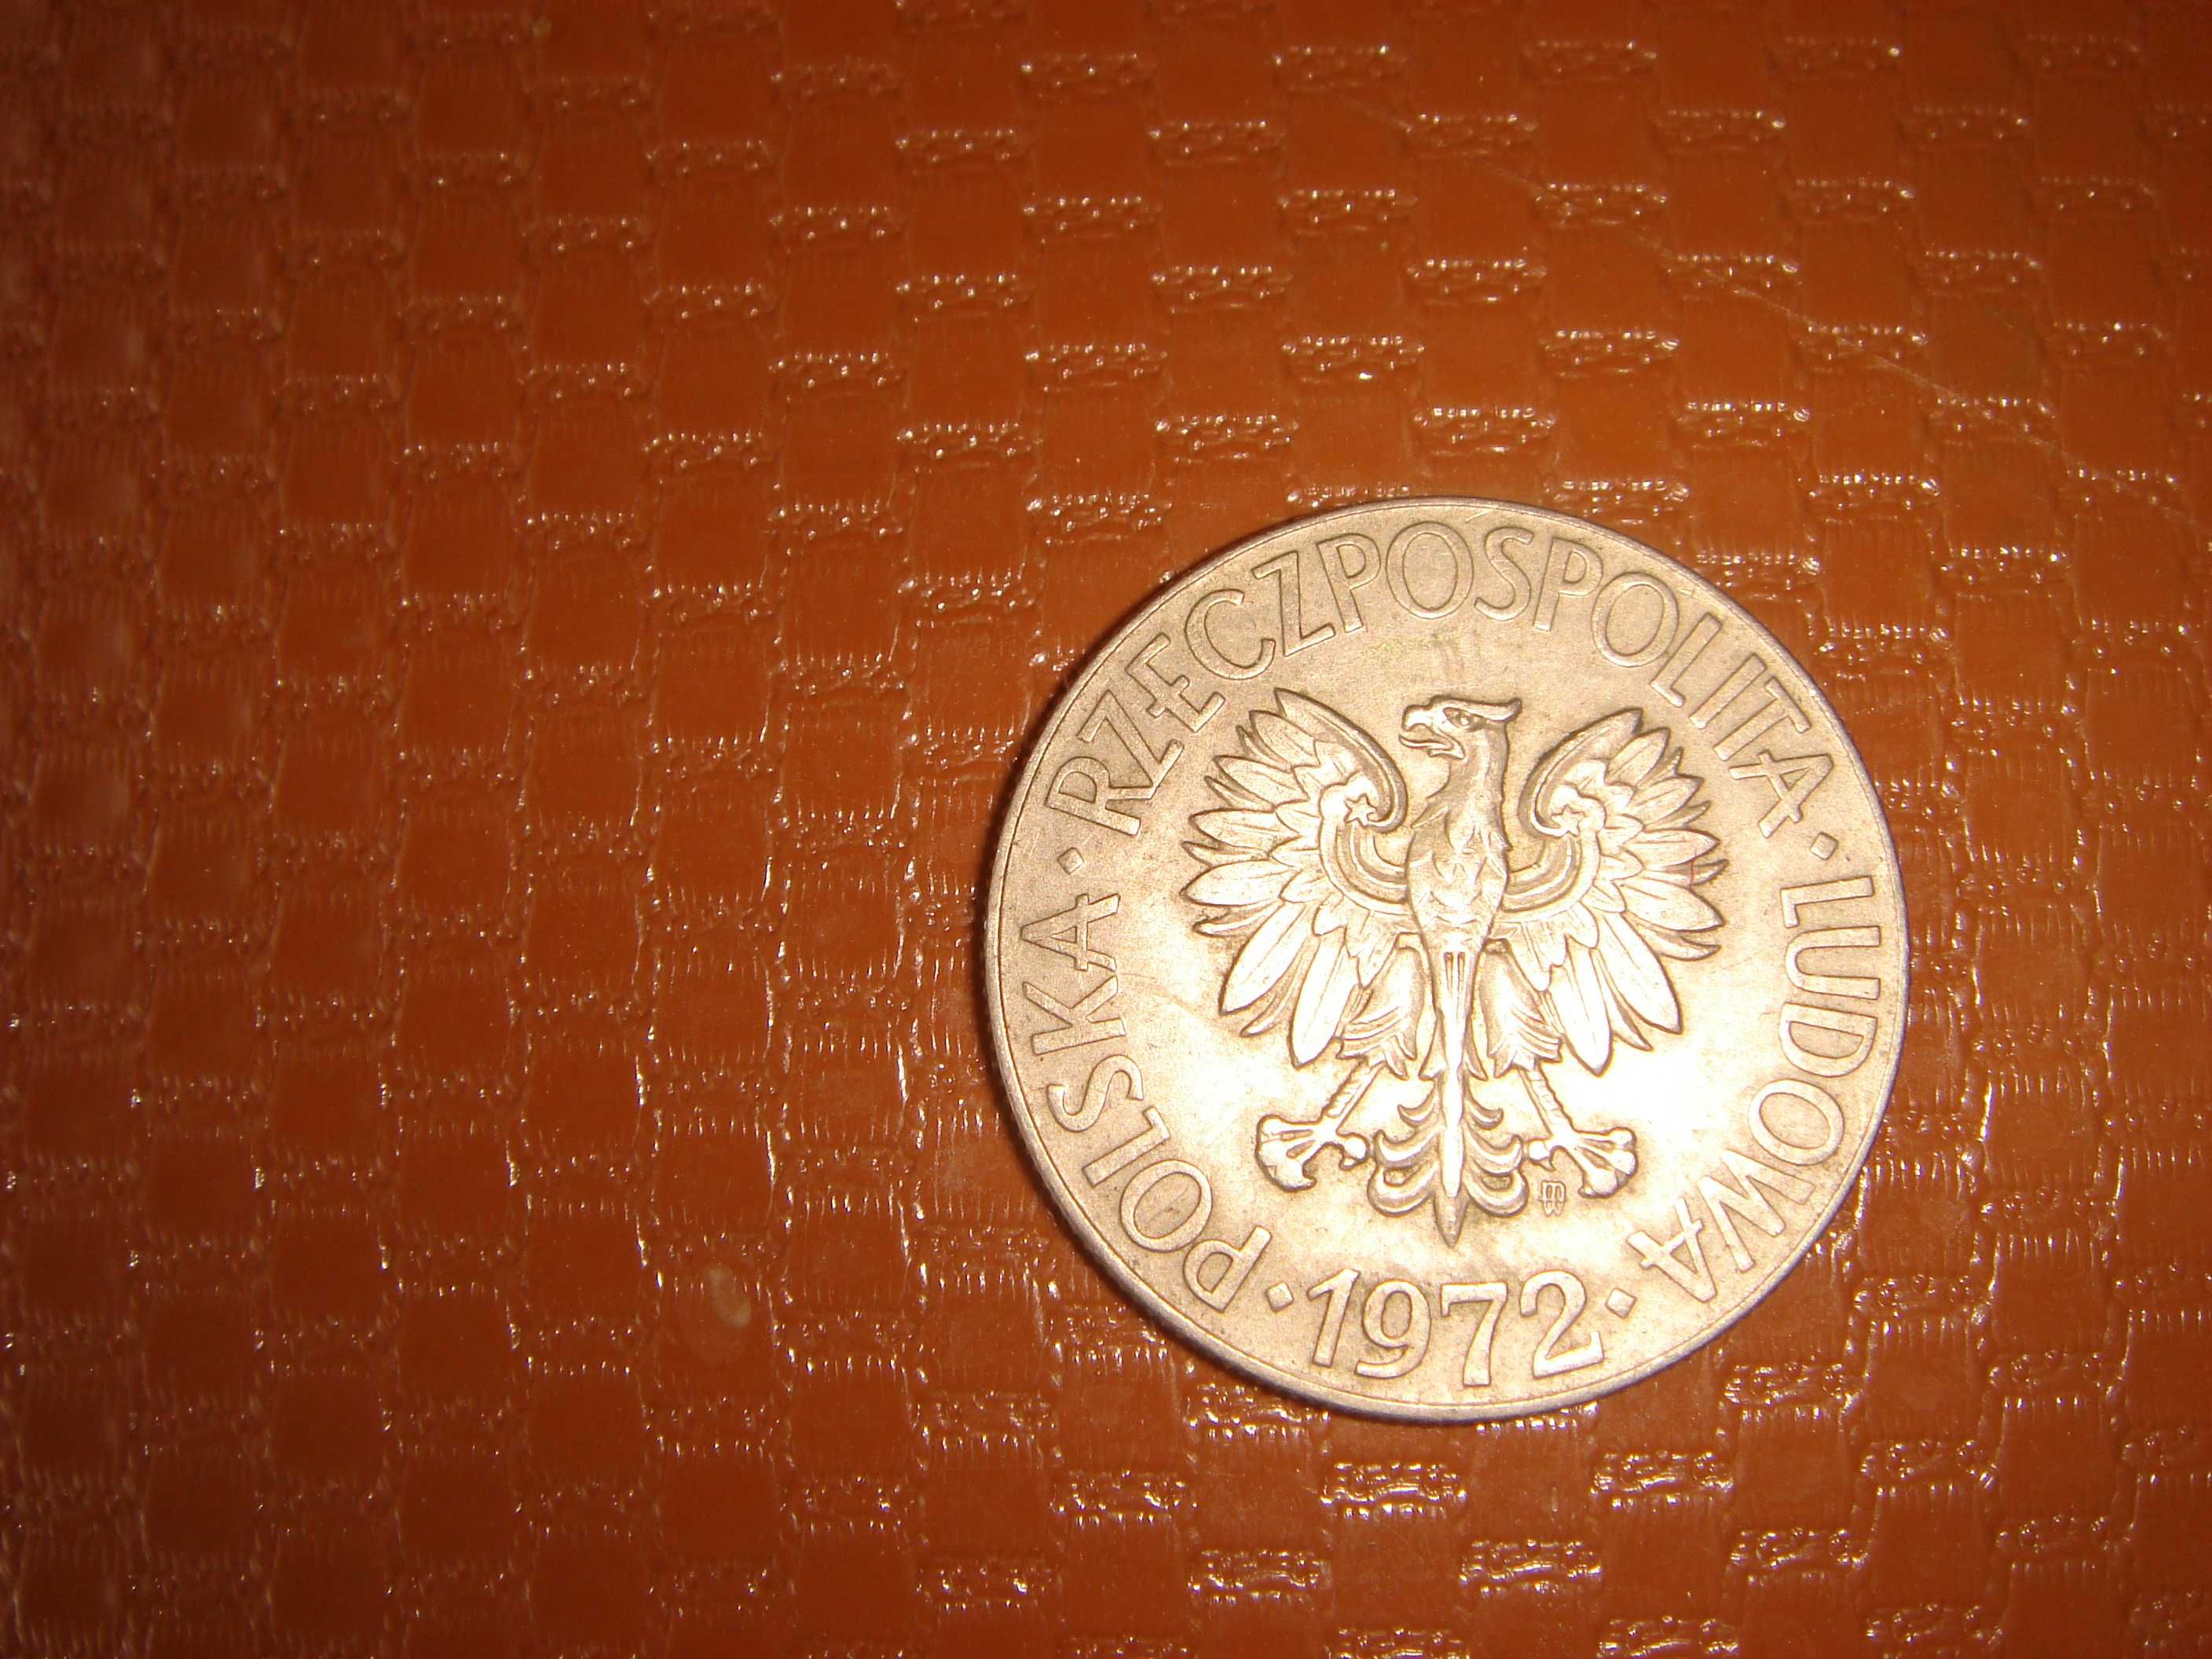 moneta 10 zł. z 1972 roku